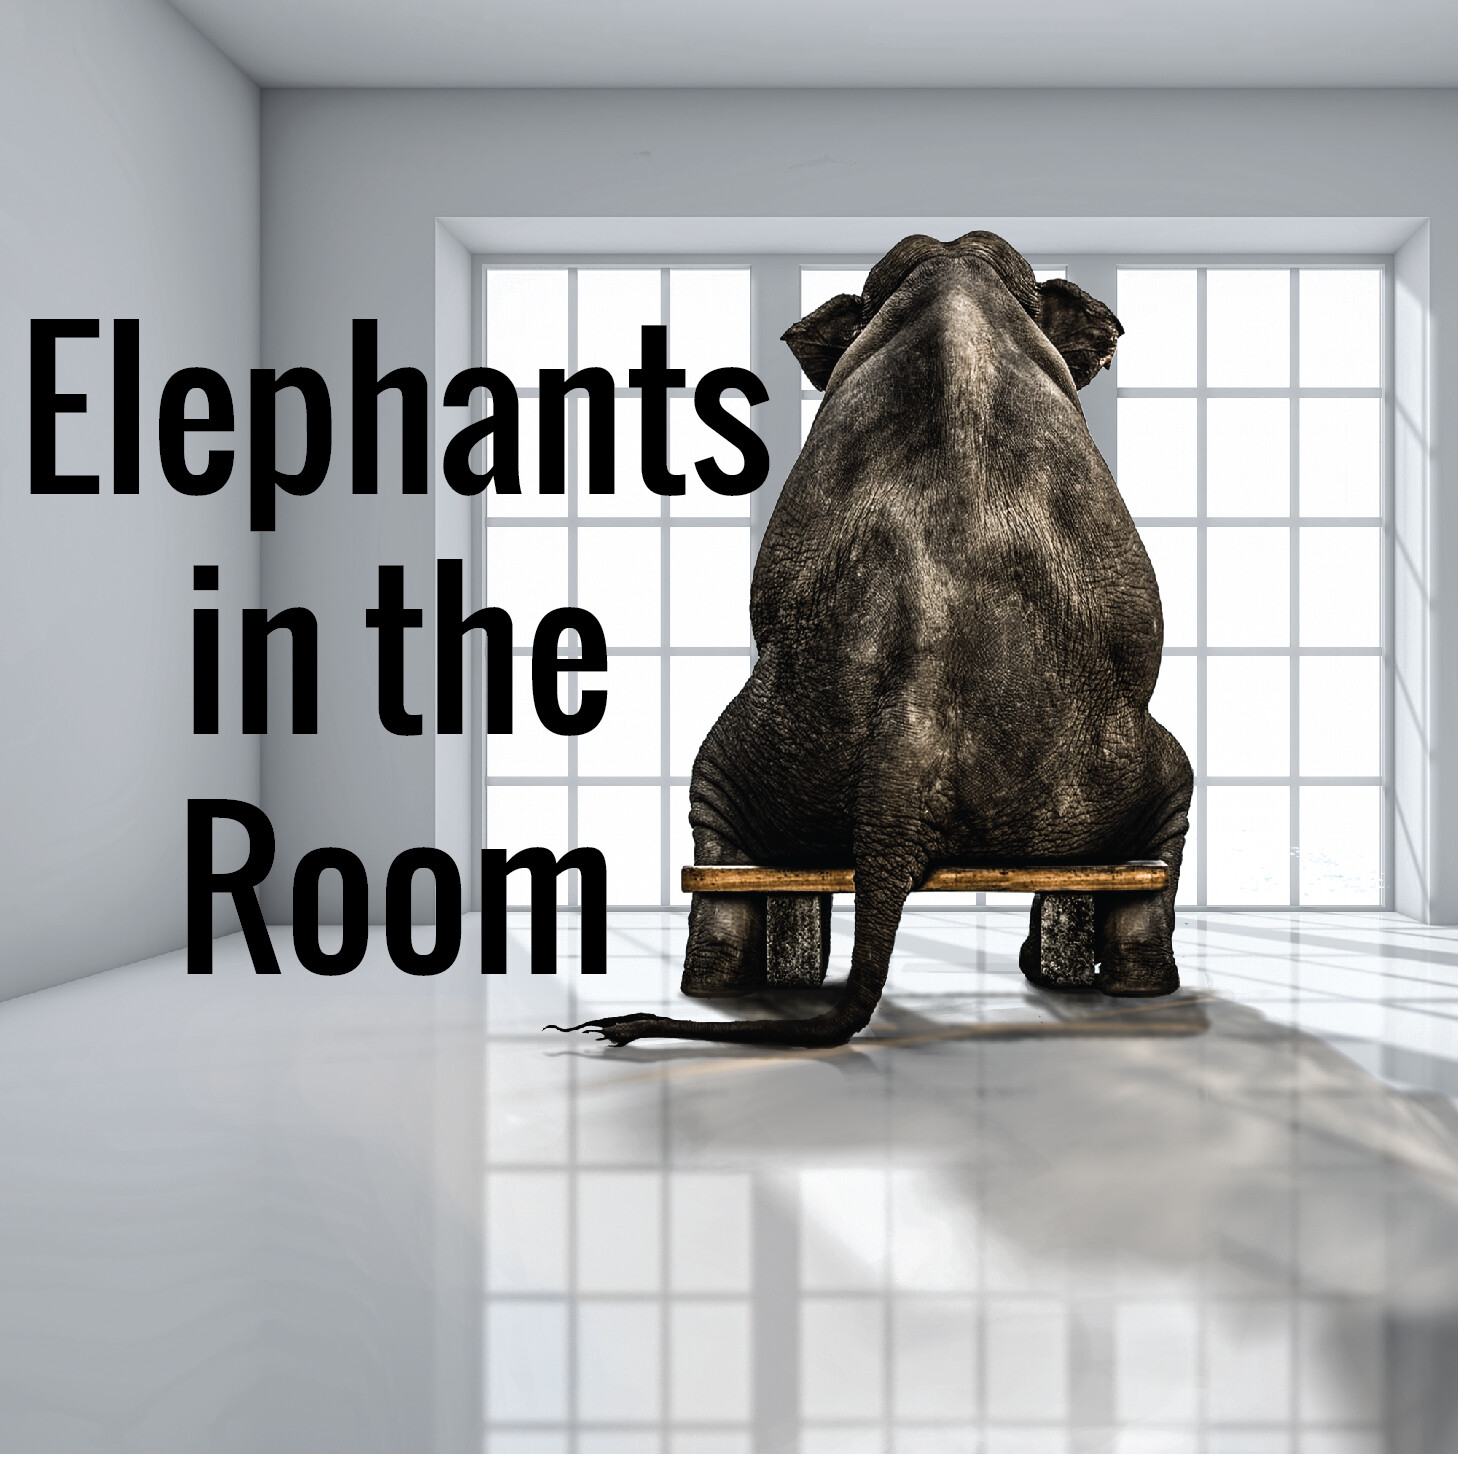 Elephants in the Room: Addiction